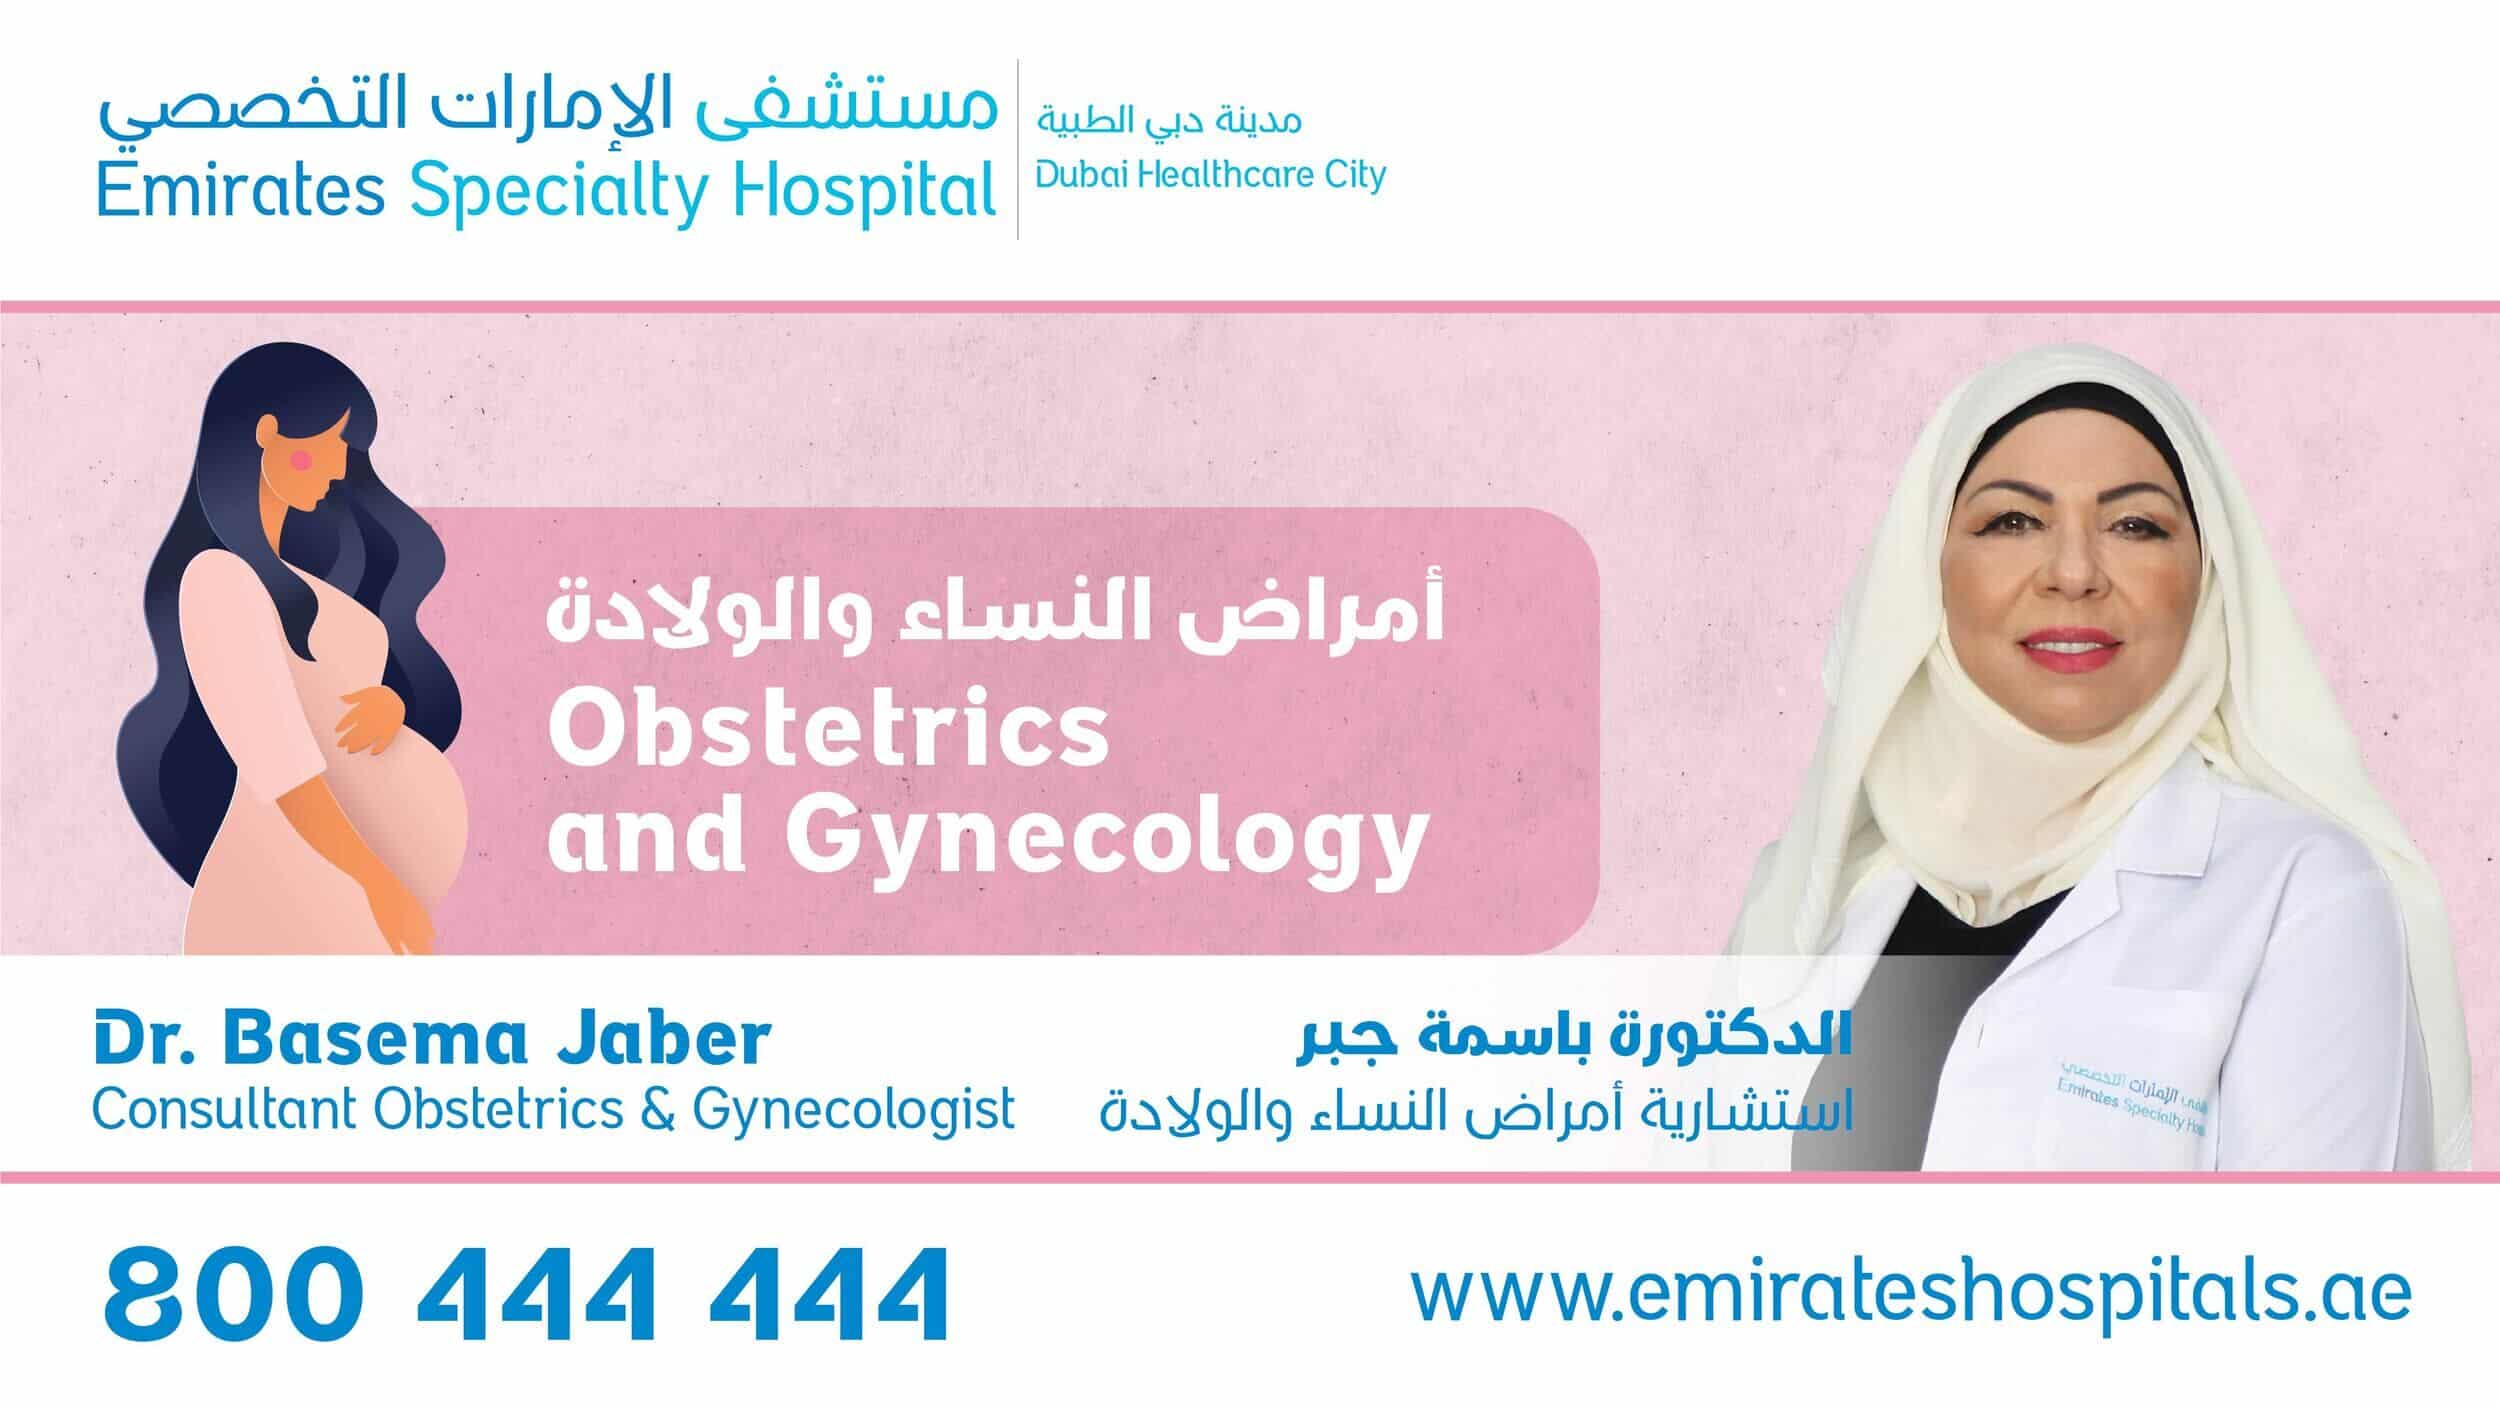 Dr. Basema Jaber Consultant Obstetrics & Gynecologist